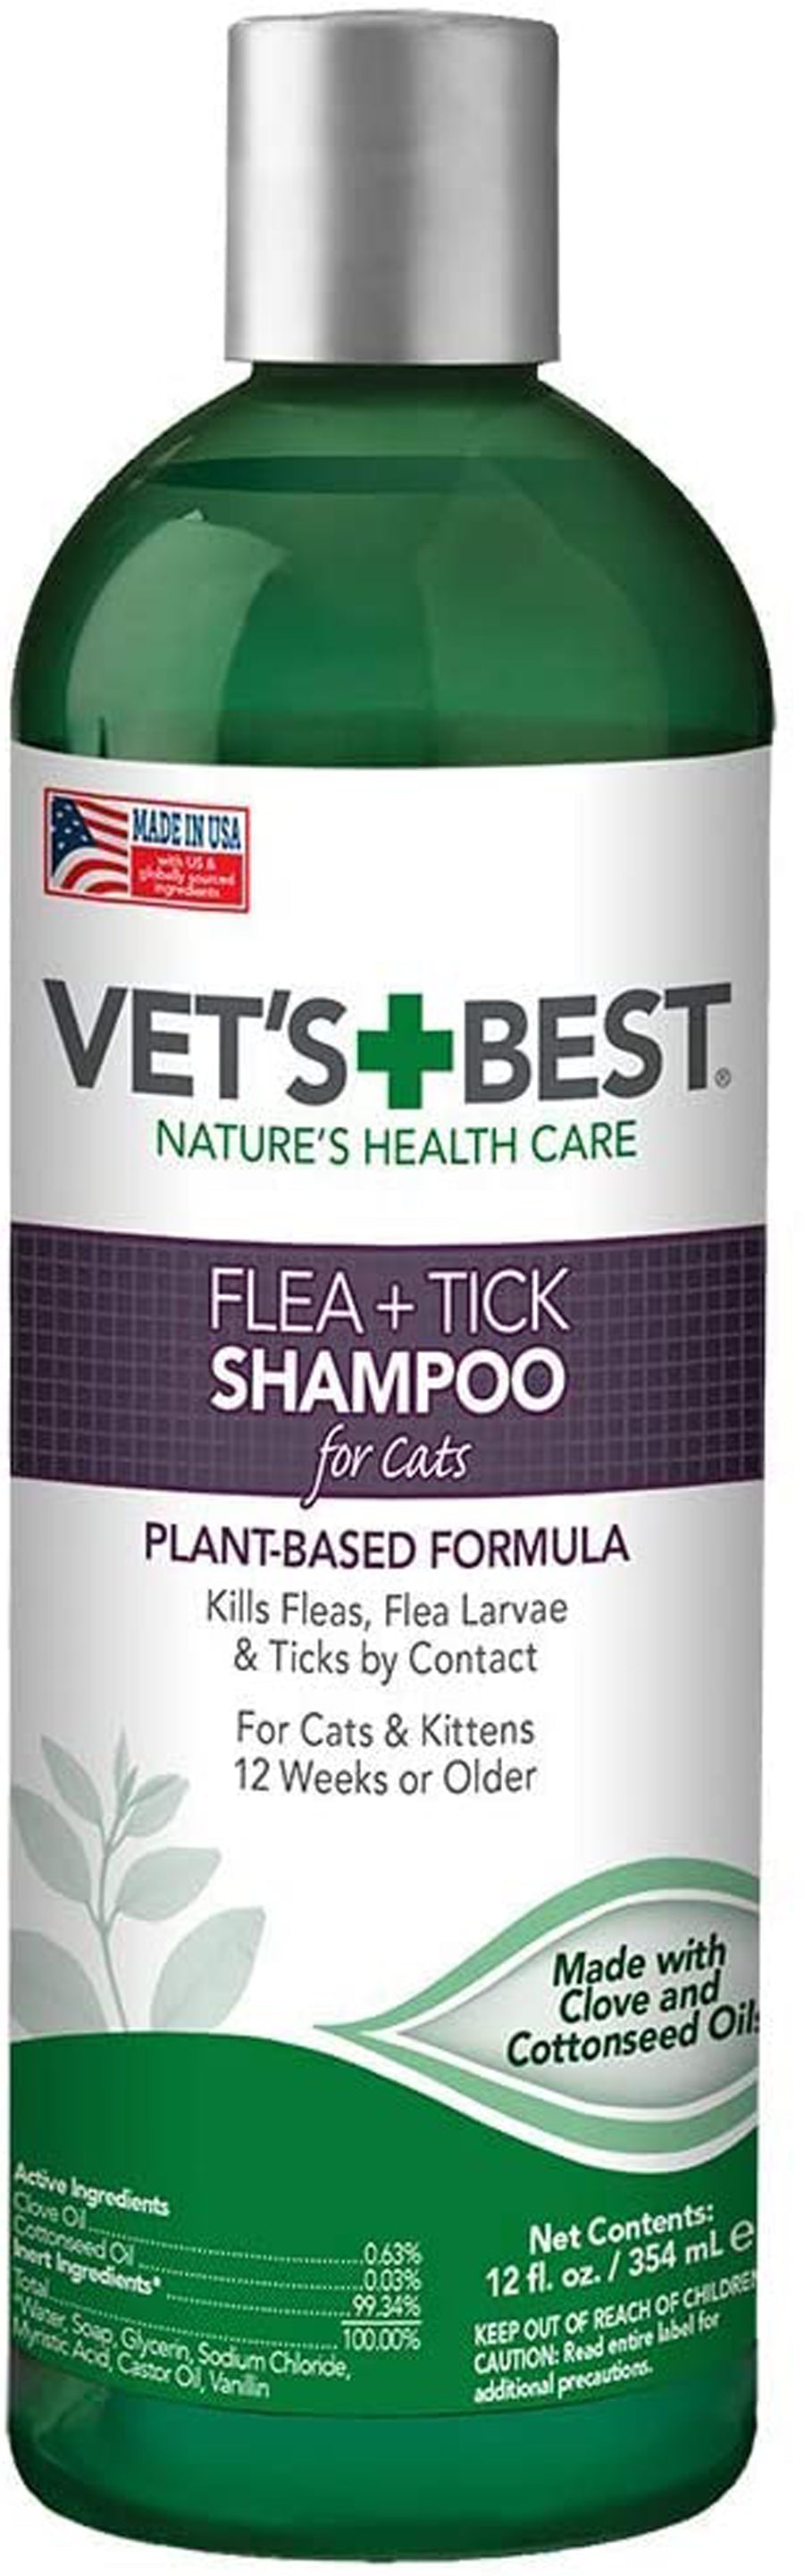 Vets Best Flea and Tick Shampoo for Cats 12 Fl. oz